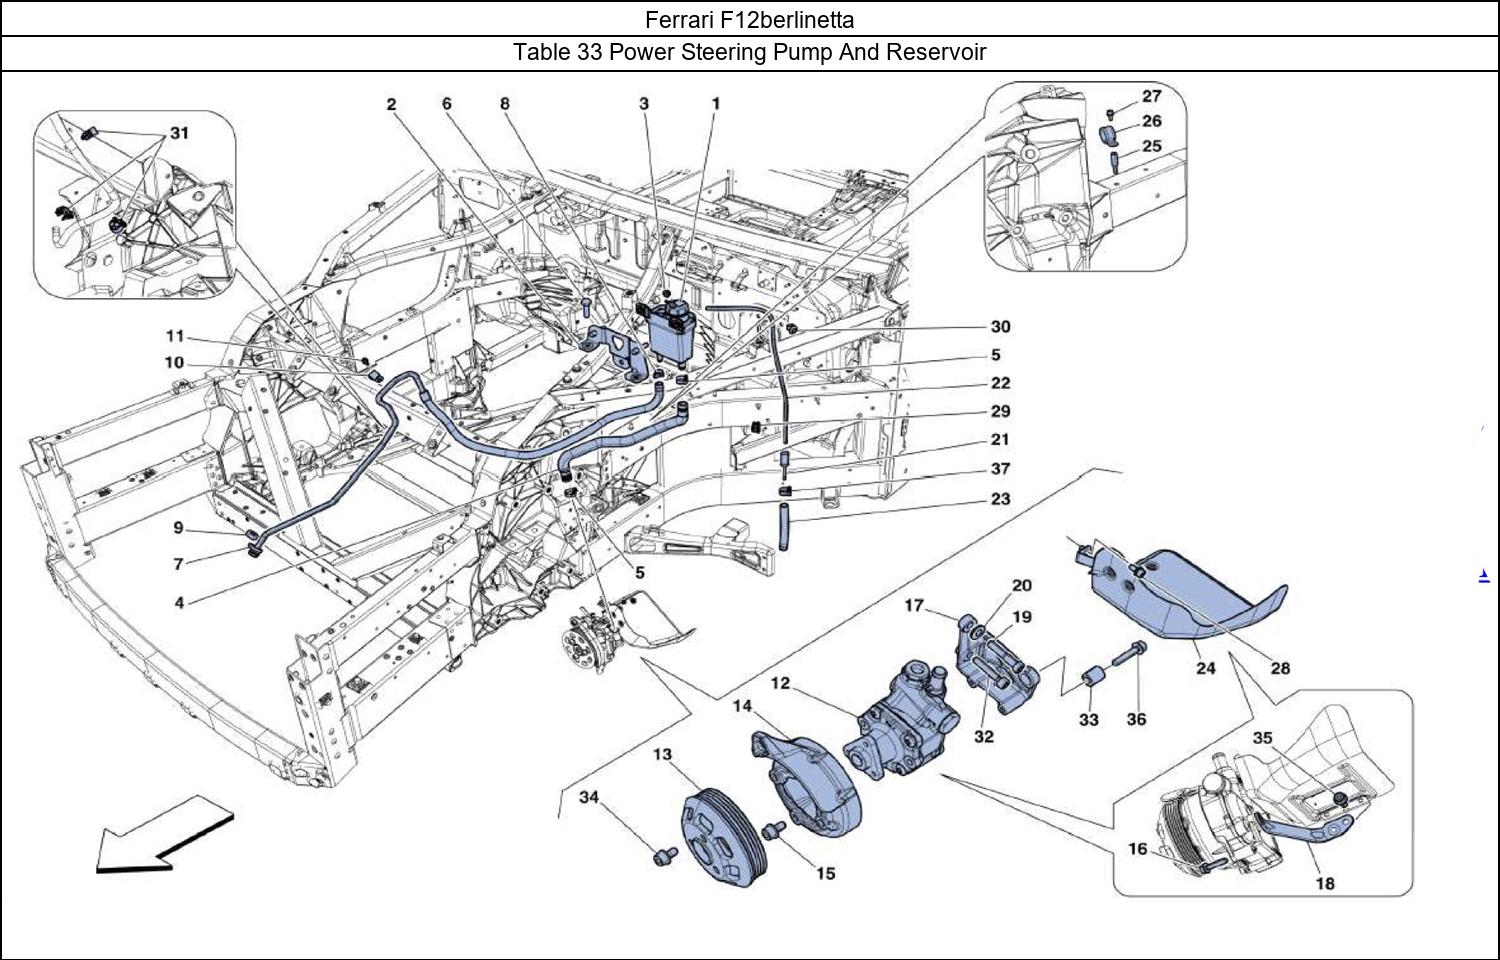 Ferrari Parts Ferrari F12berlinetta Table 33 Power Steering Pump And Reservoir